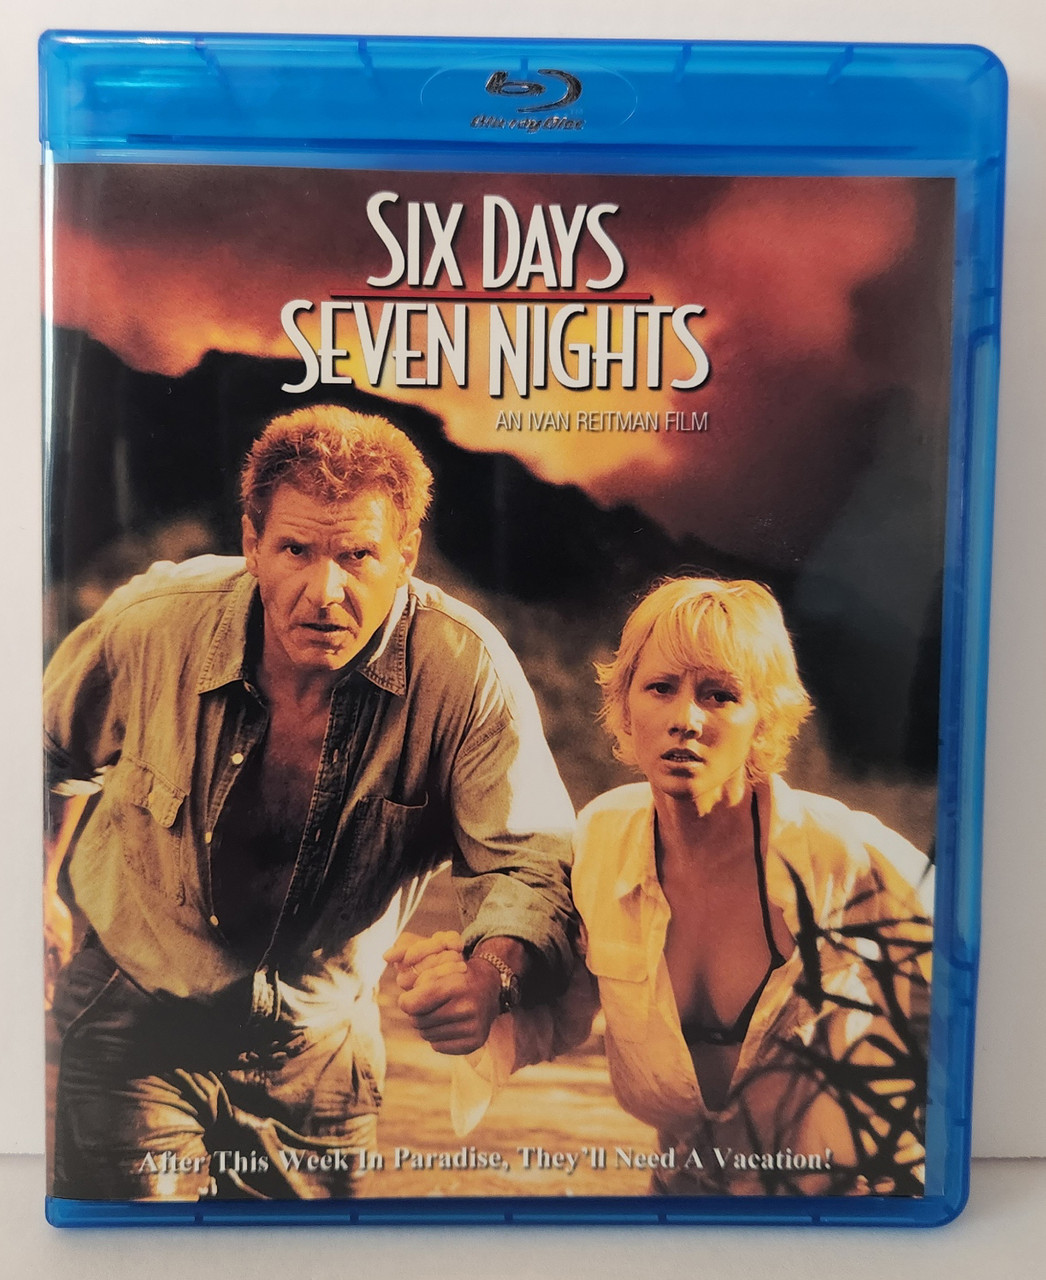 Six Days Seven Nights (1998) Blu-ray (Standard Edition)